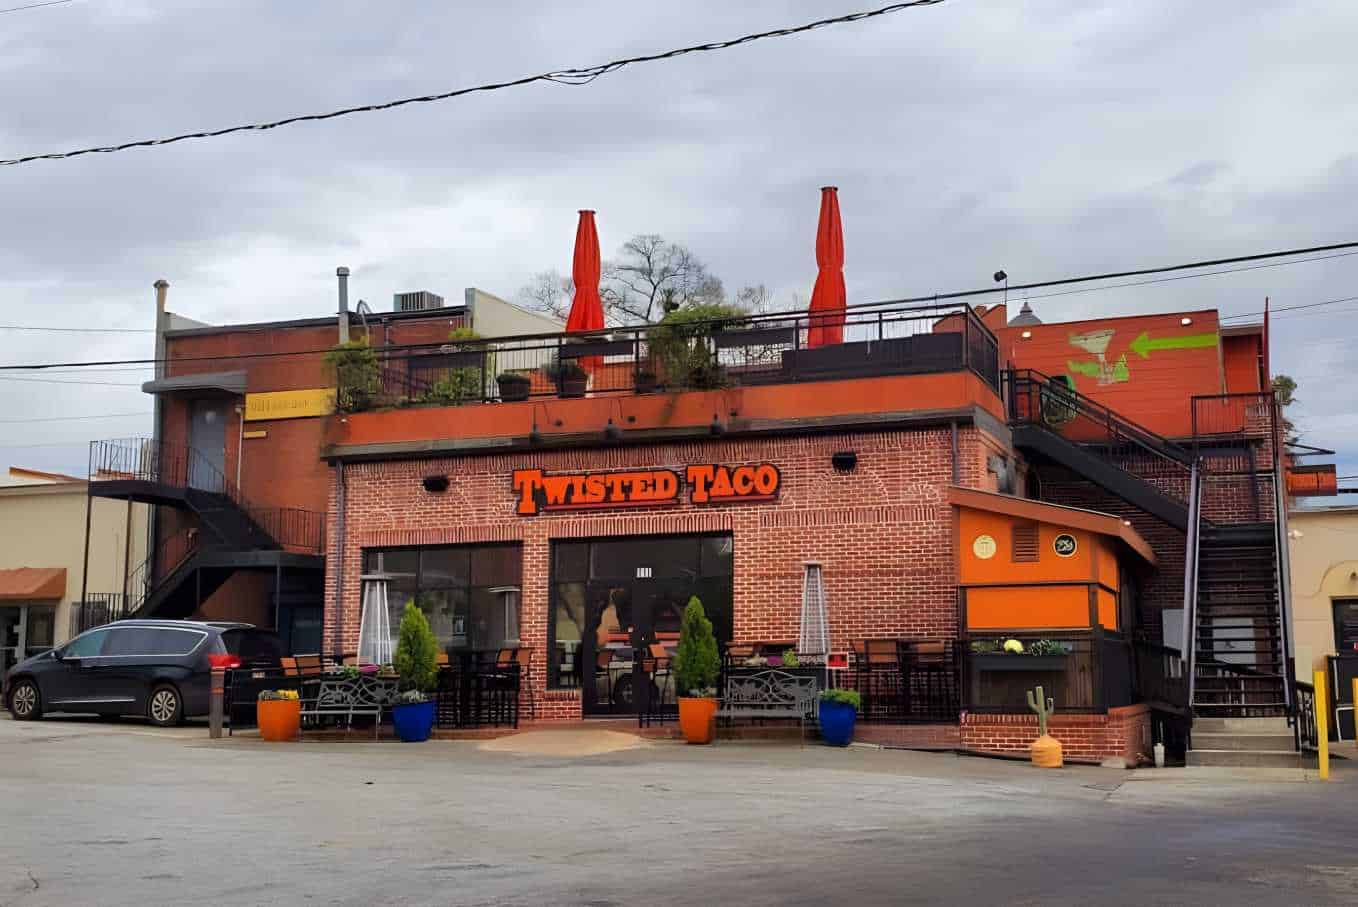 Twisted Taco Best Mexican Restaurants in Alpharetta, GA 